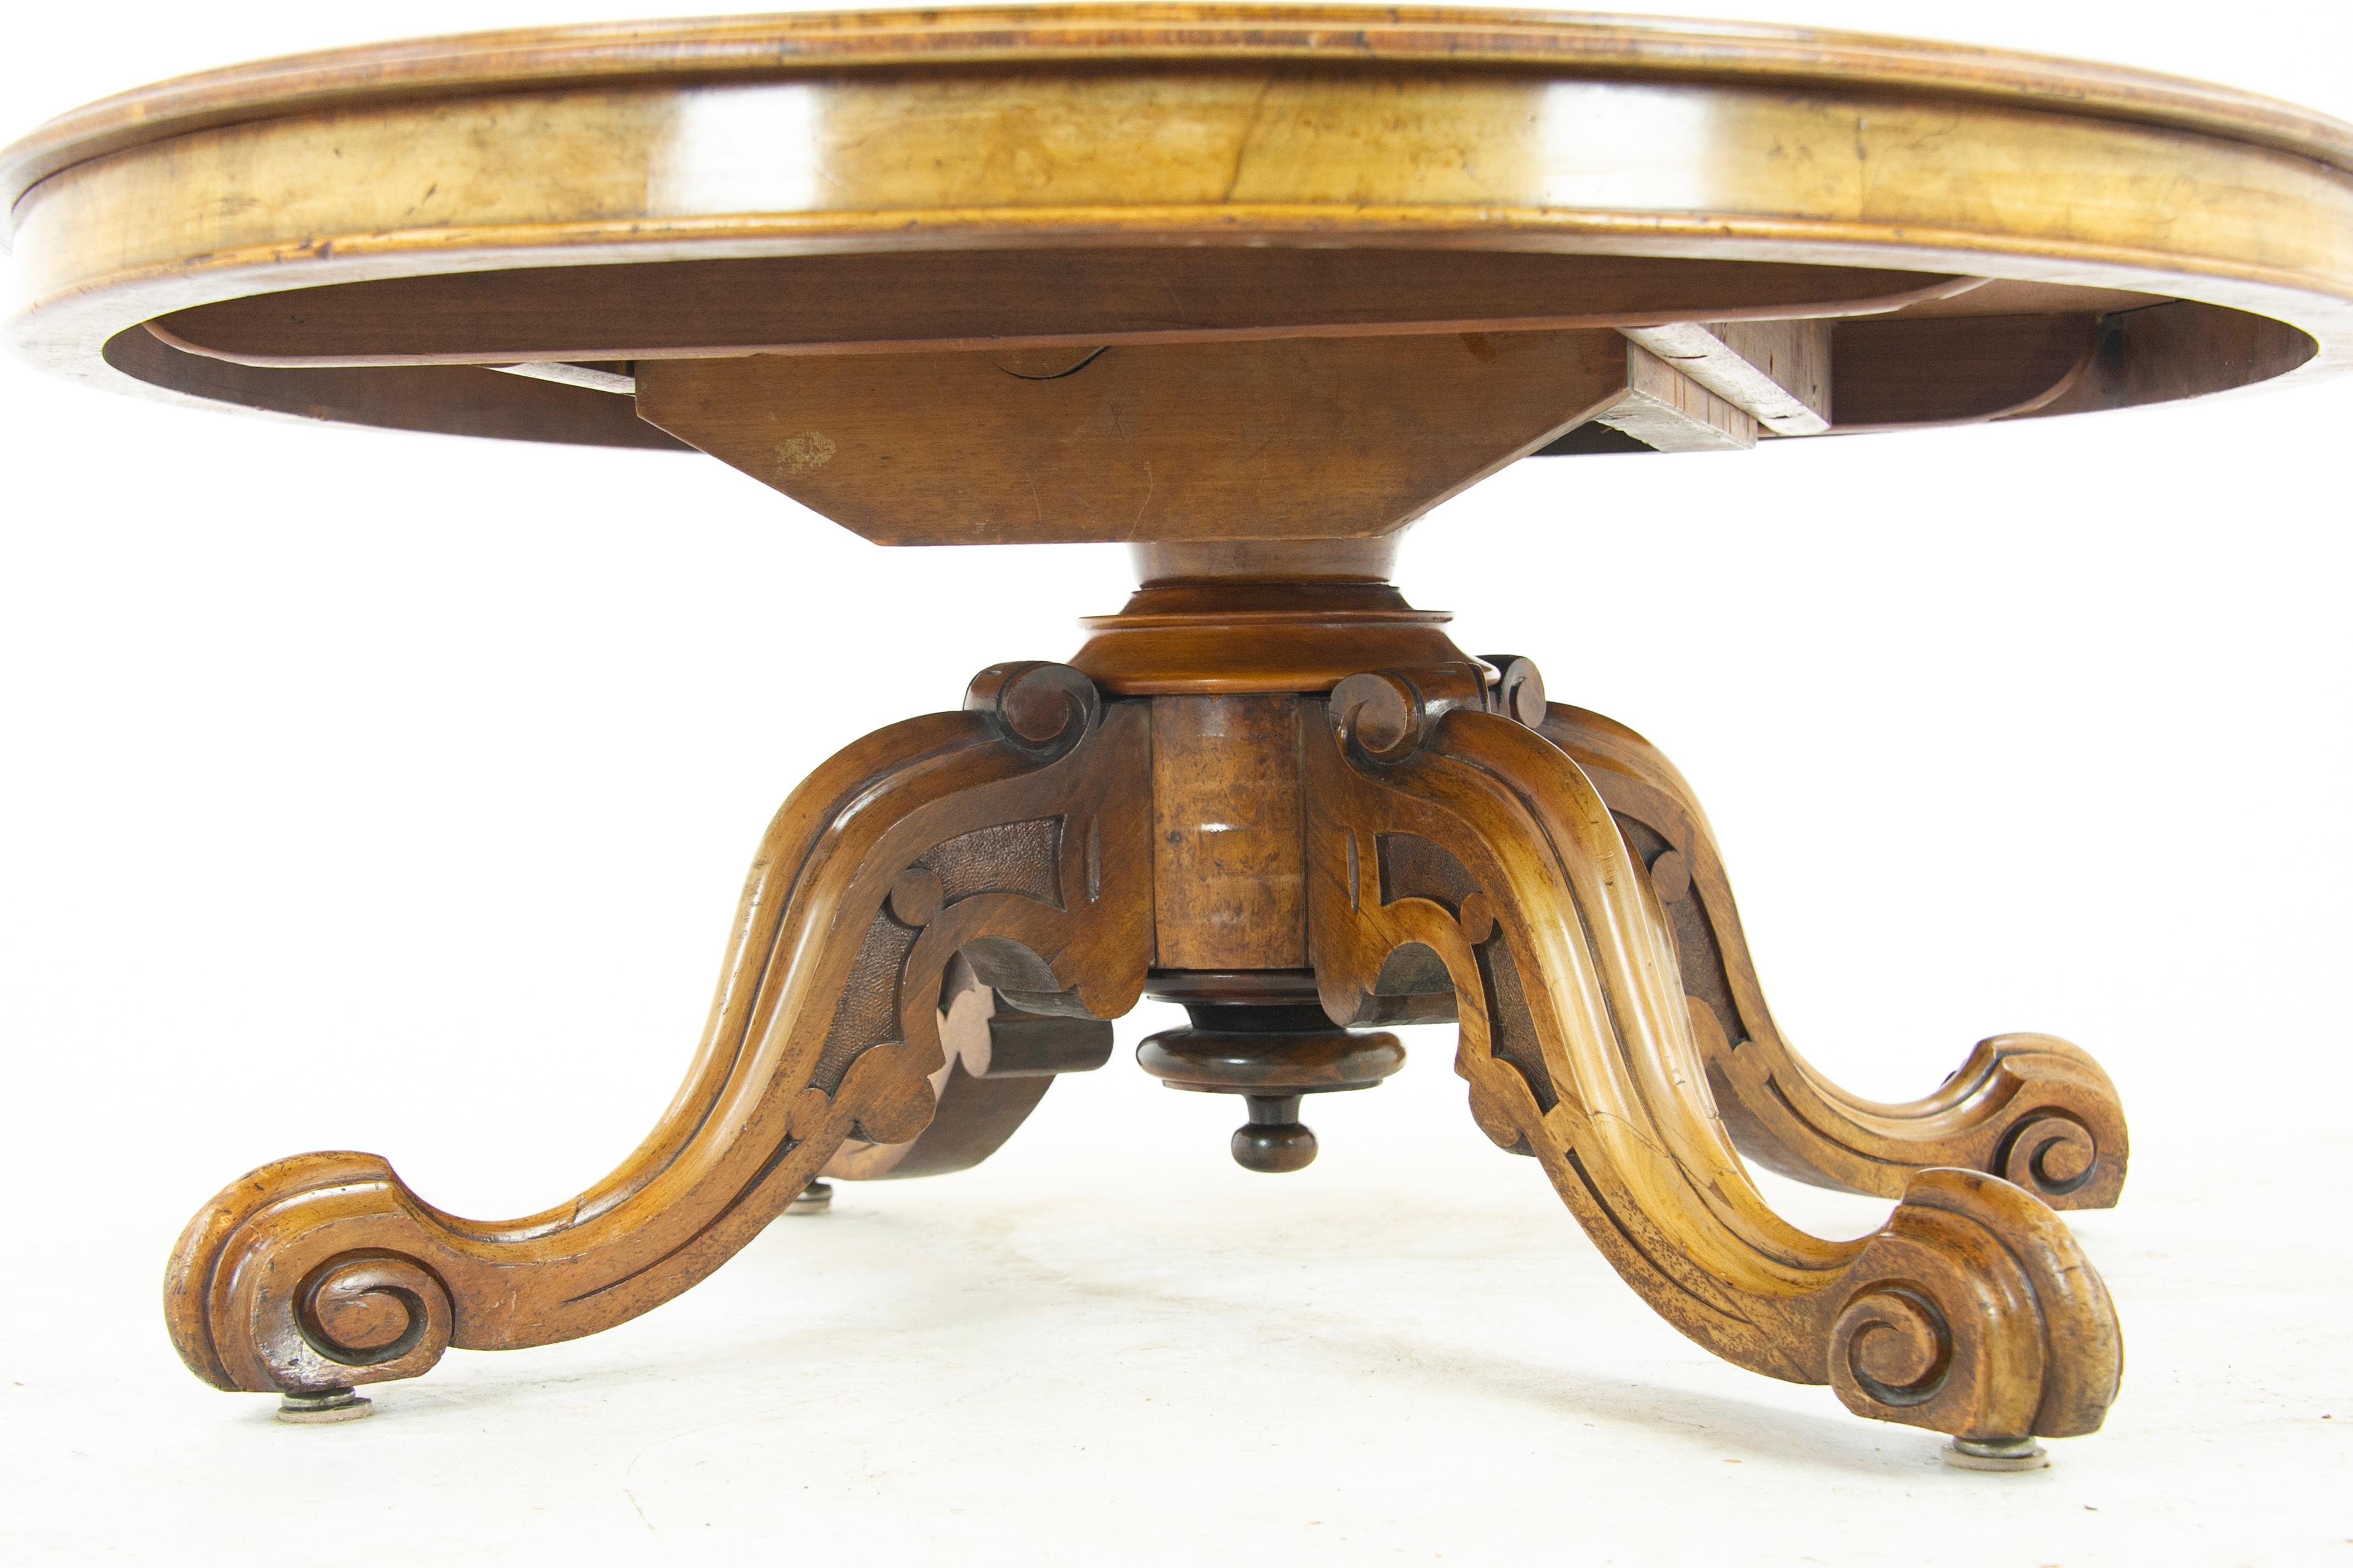 Antique Loo Table, Antique Coffee Table, Inlaid Victorian Table, 1870 (Handgefertigt)